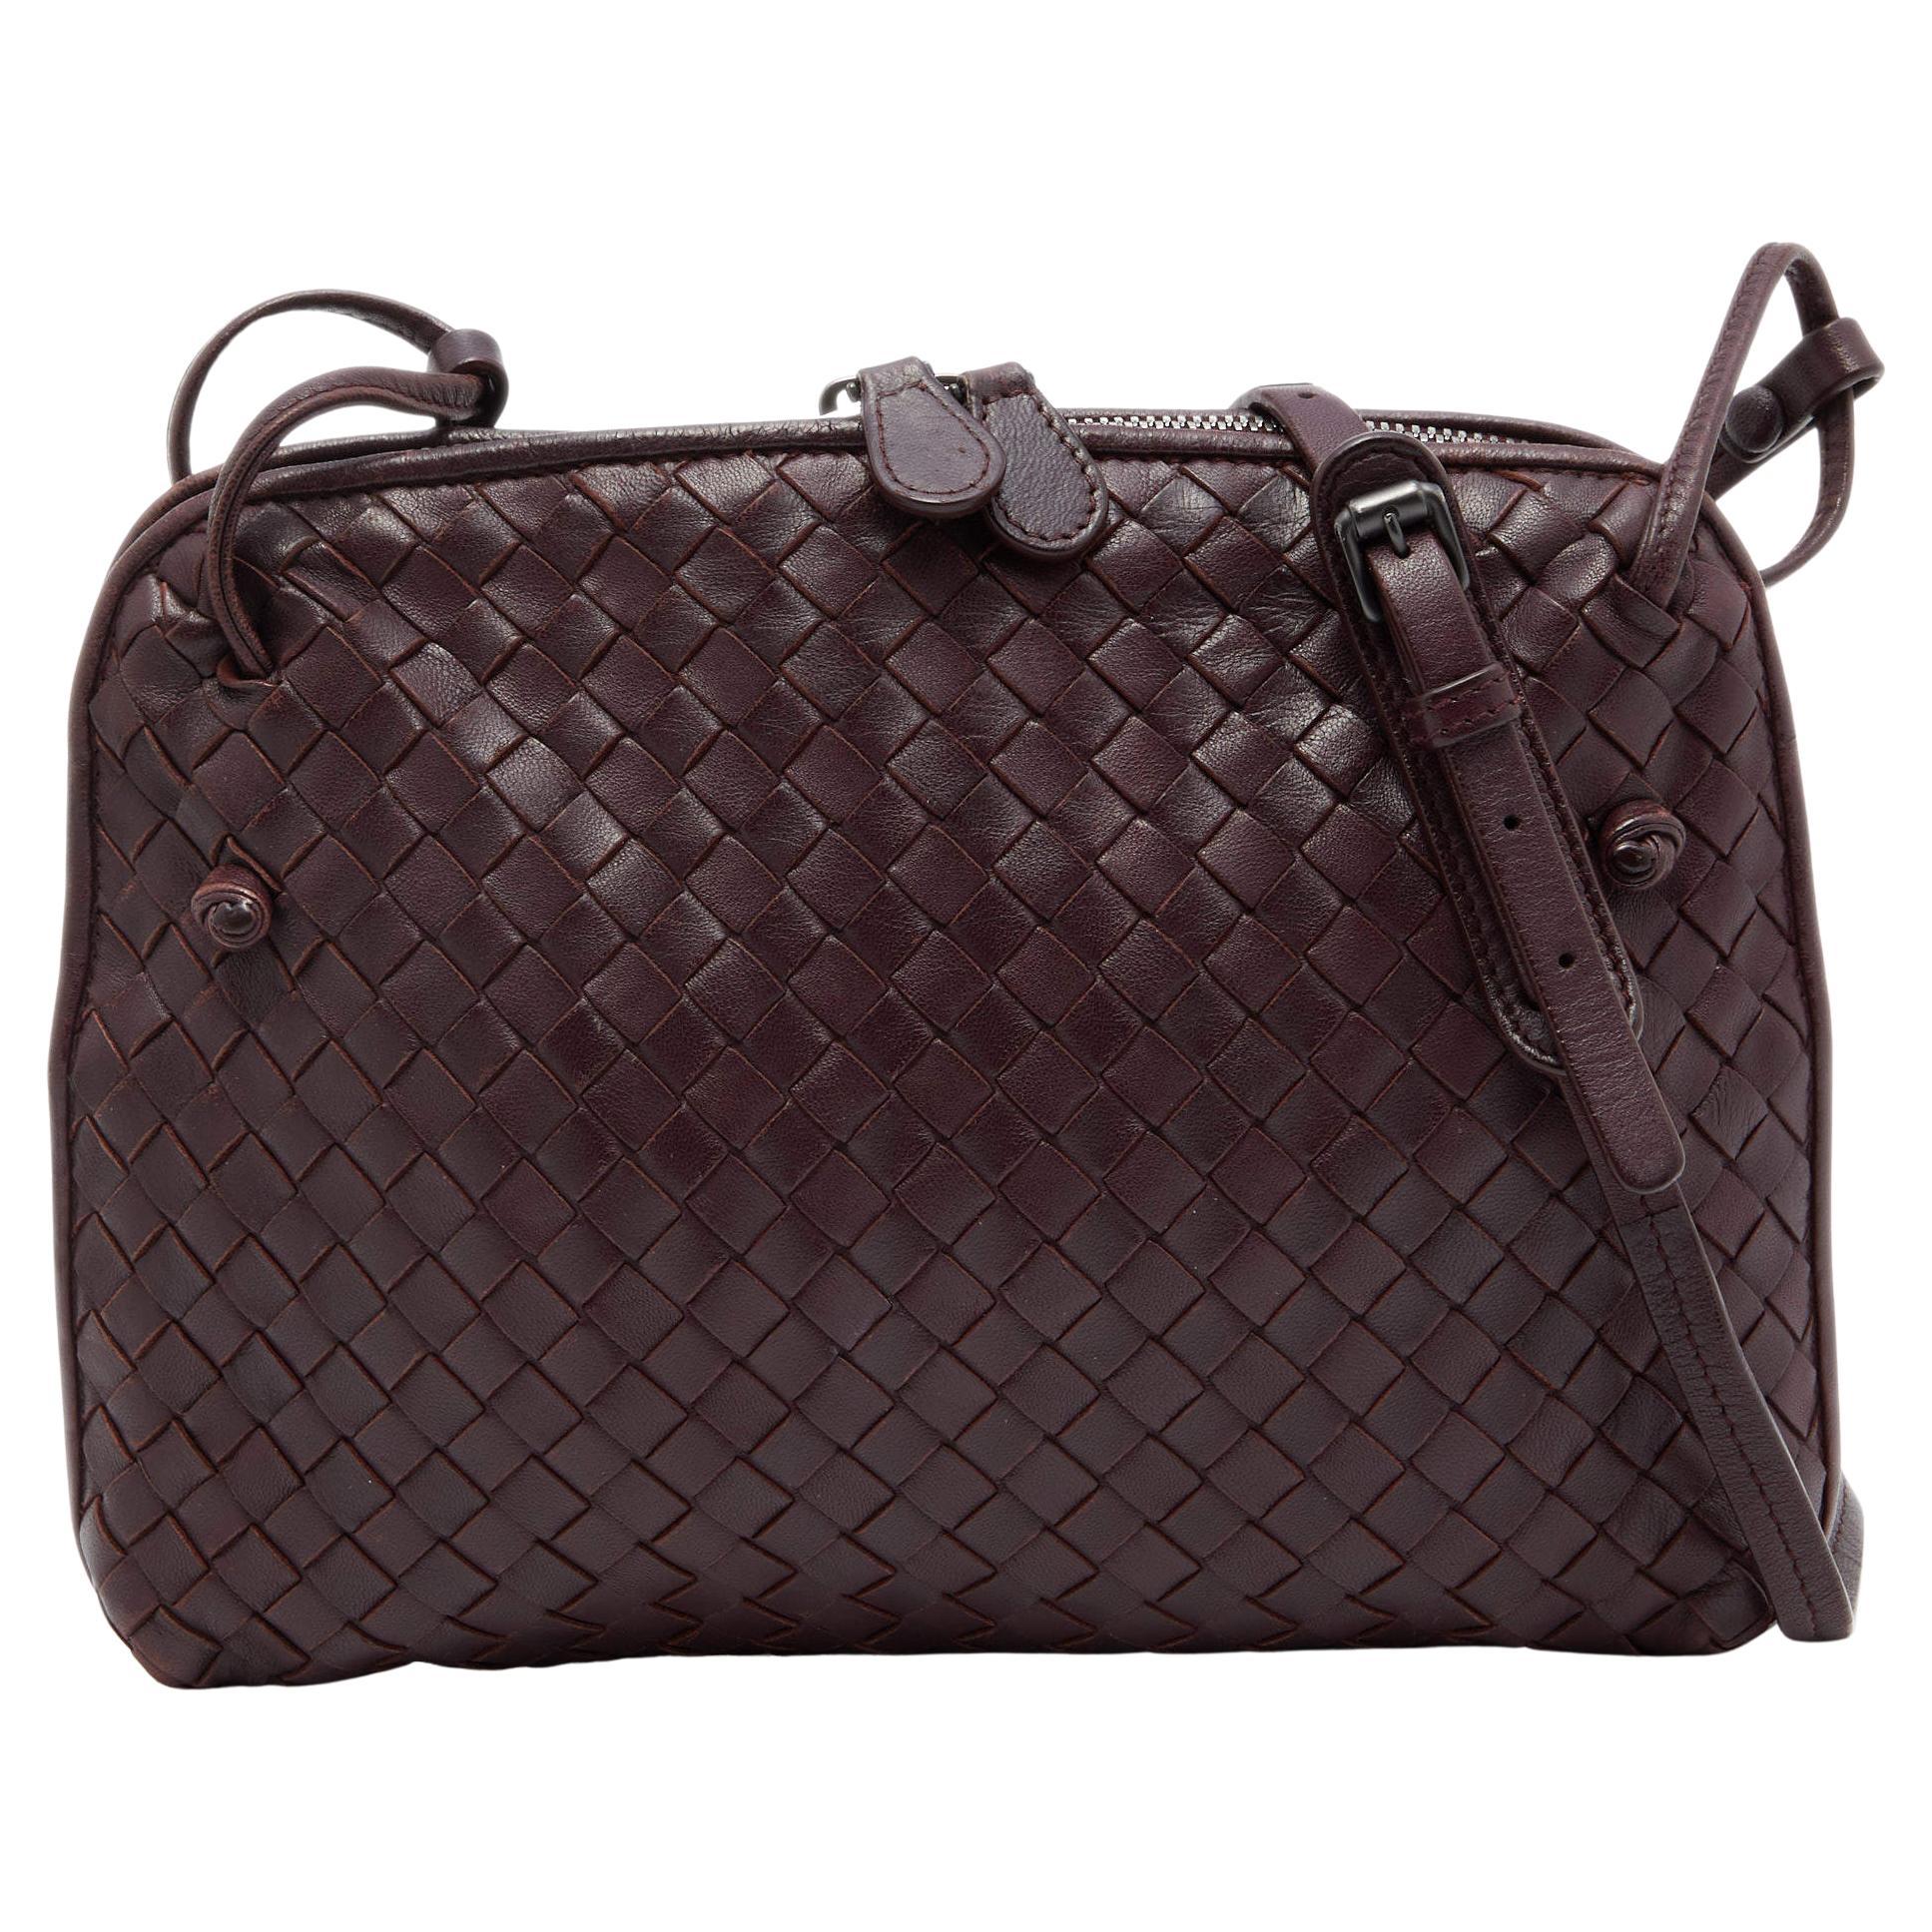 Bottega Veneta Burgundy Intrecciato Leather Nodini Shoulder Bag